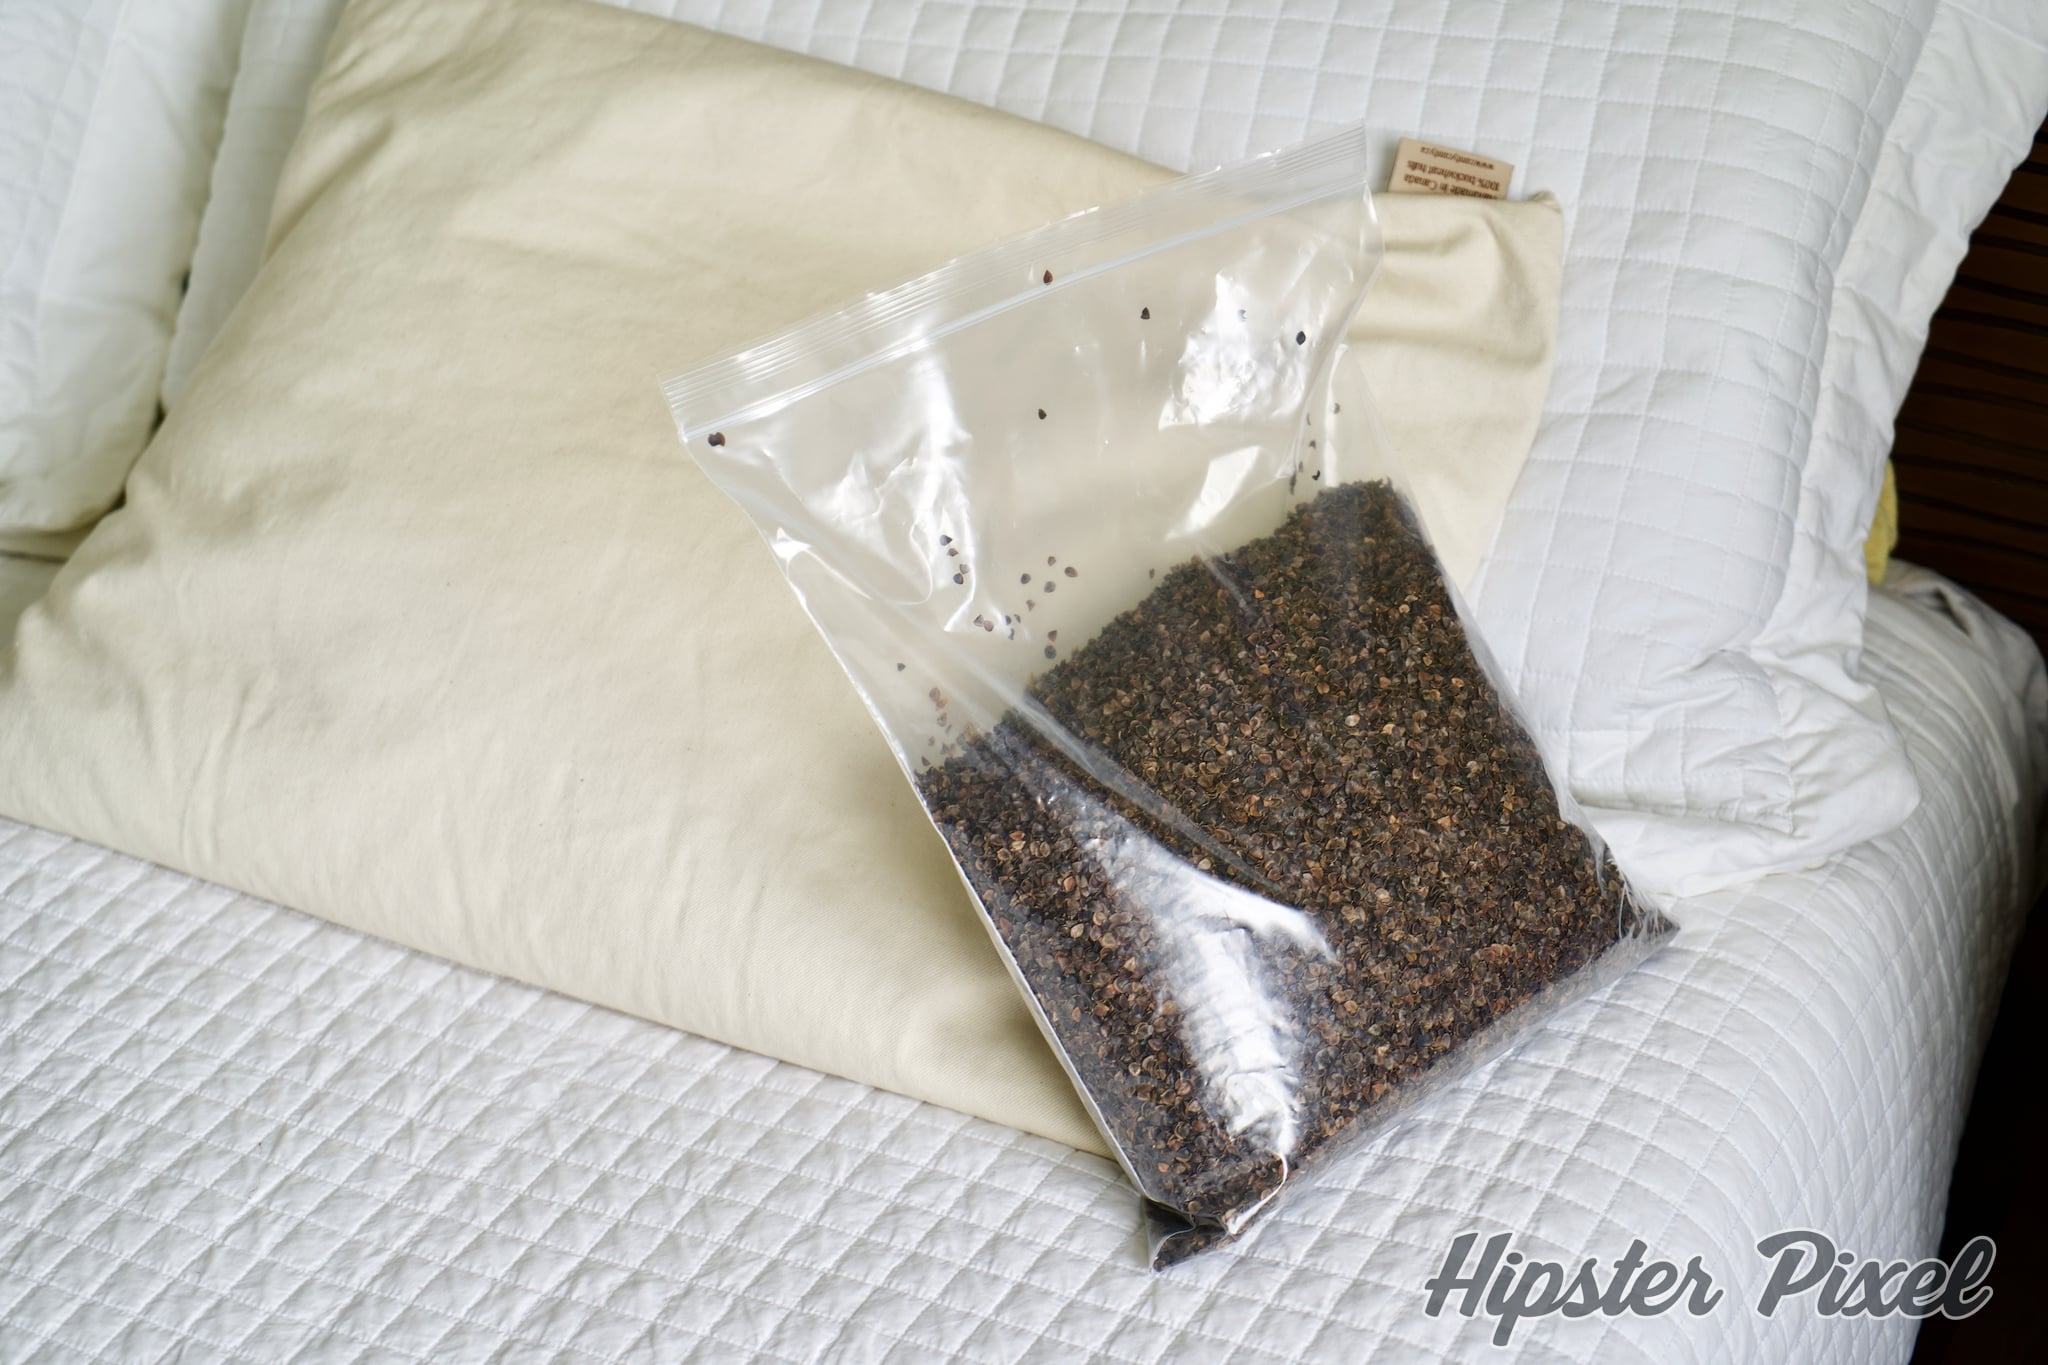 ComfySleep Organic Buckwheat Hull Pillow Review